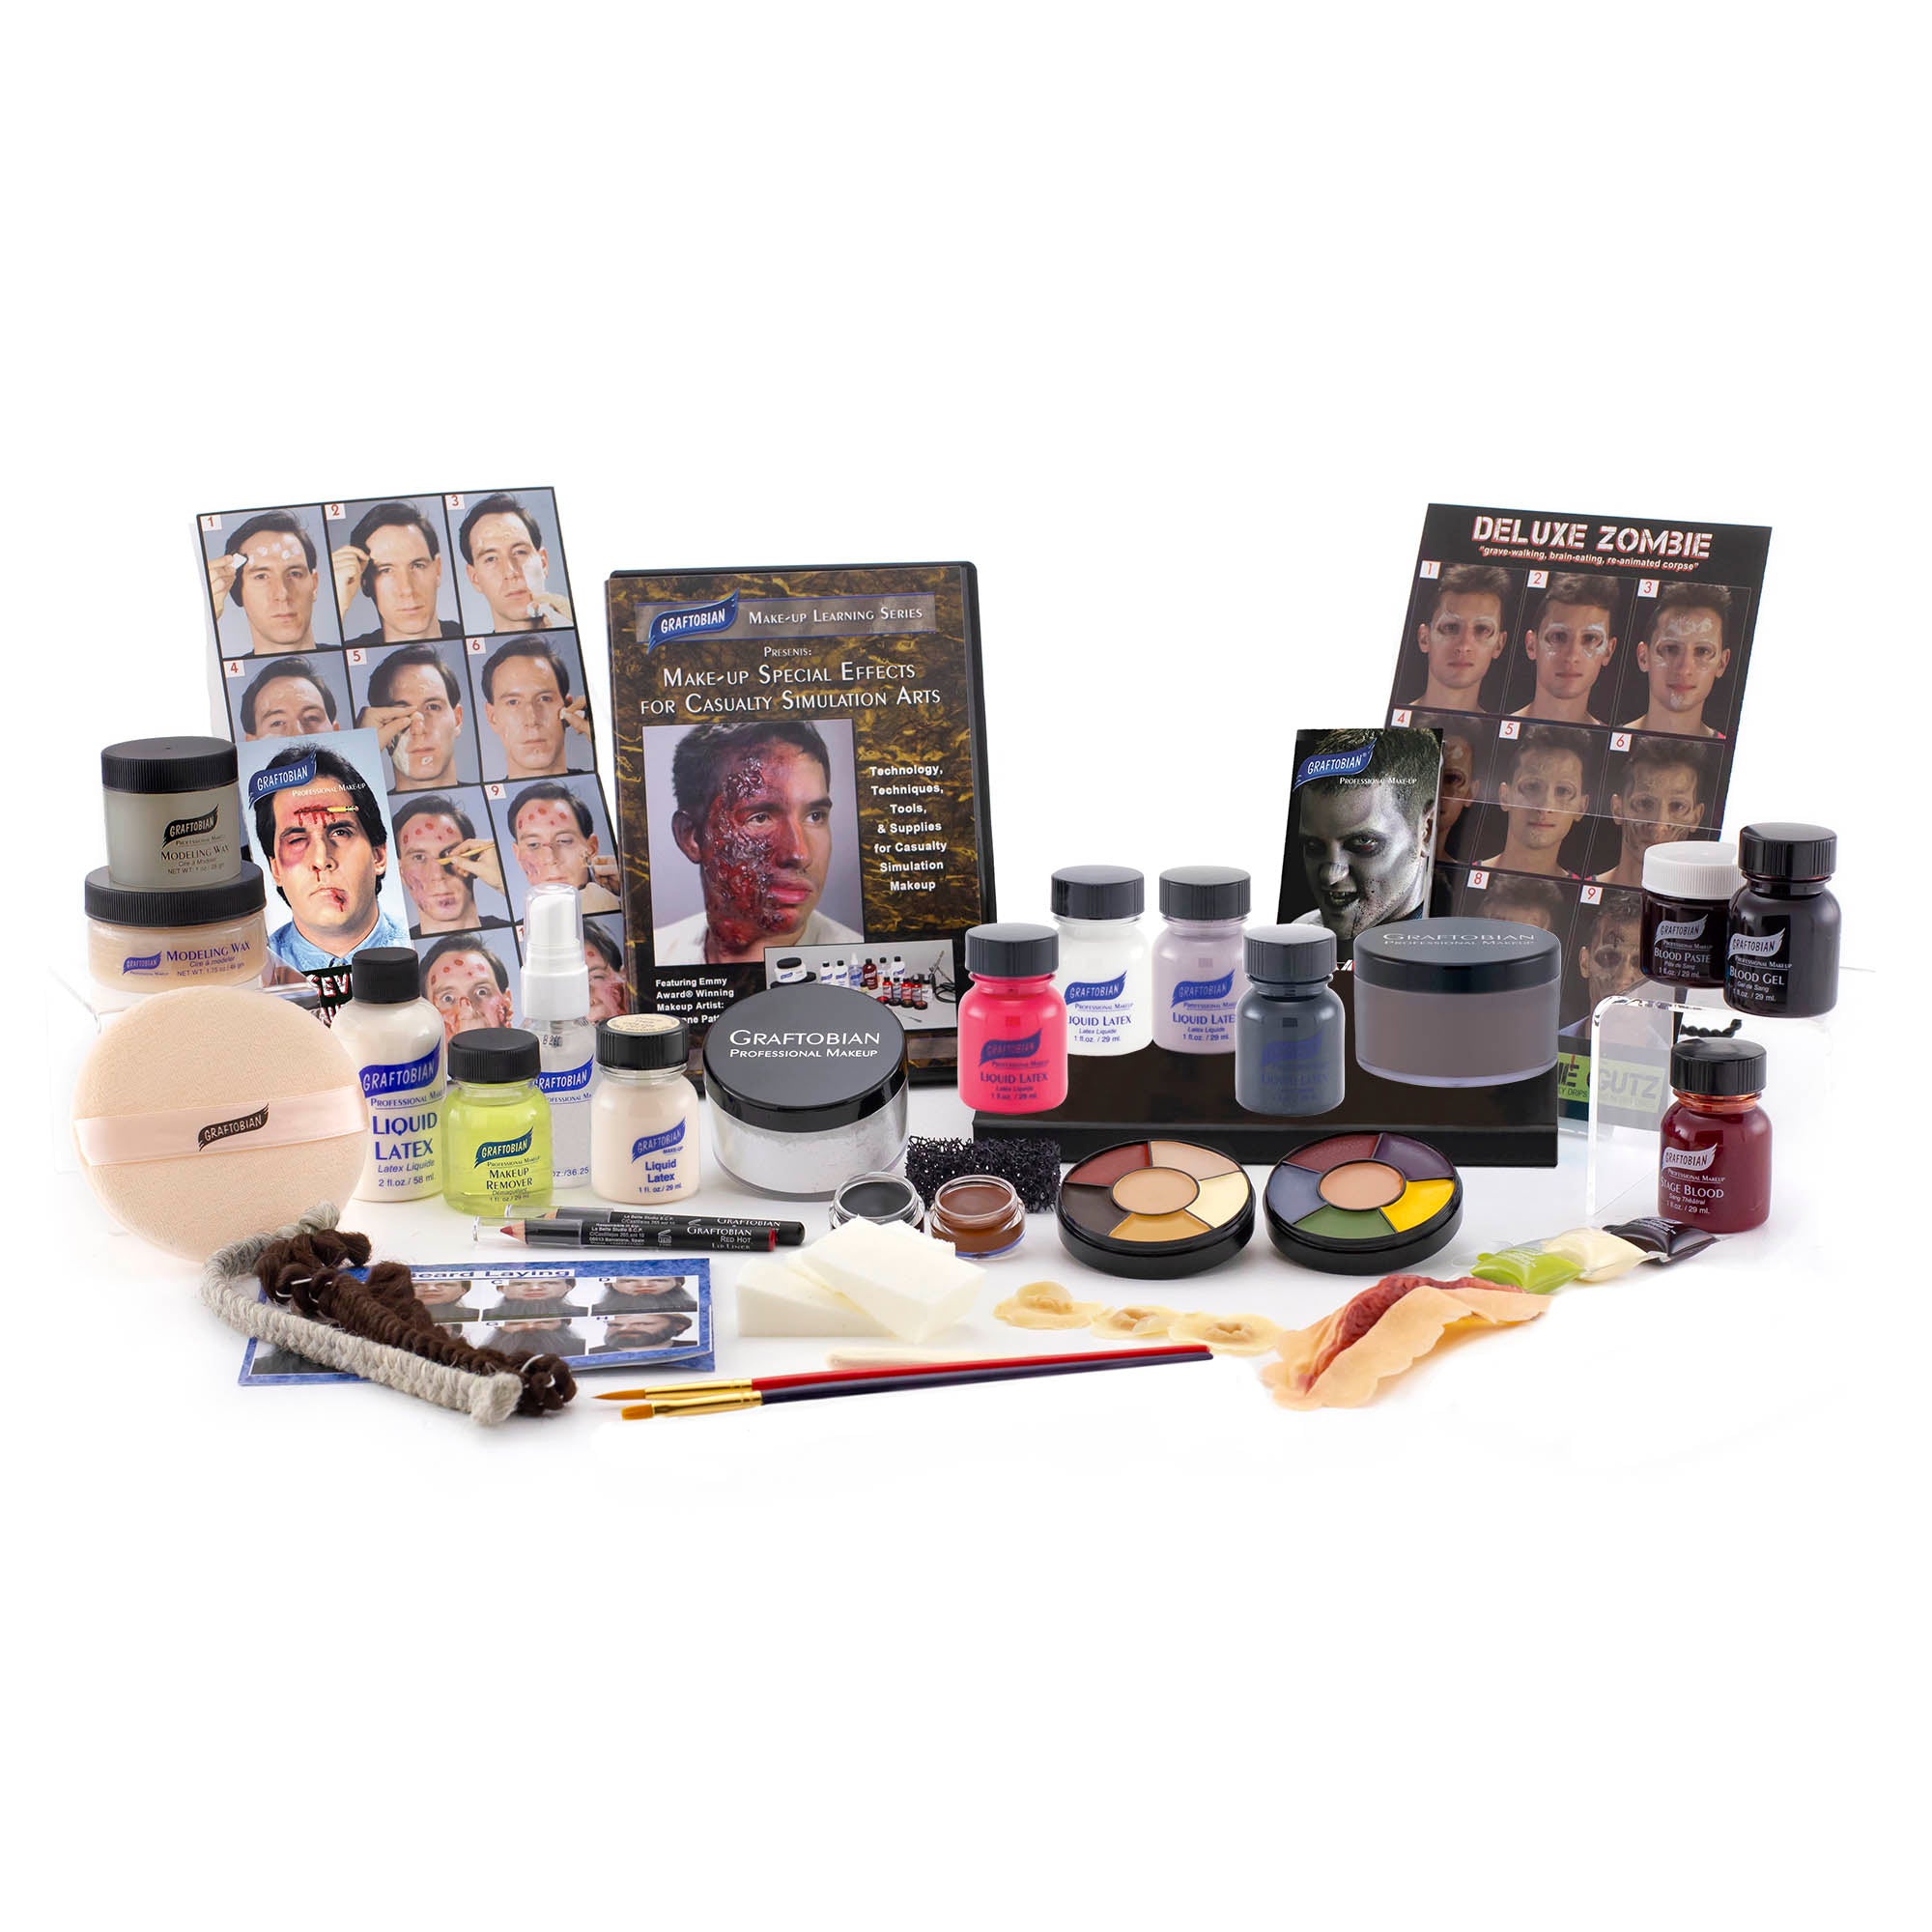 Graftobian Special FX Trauma Pro Makeup Kit